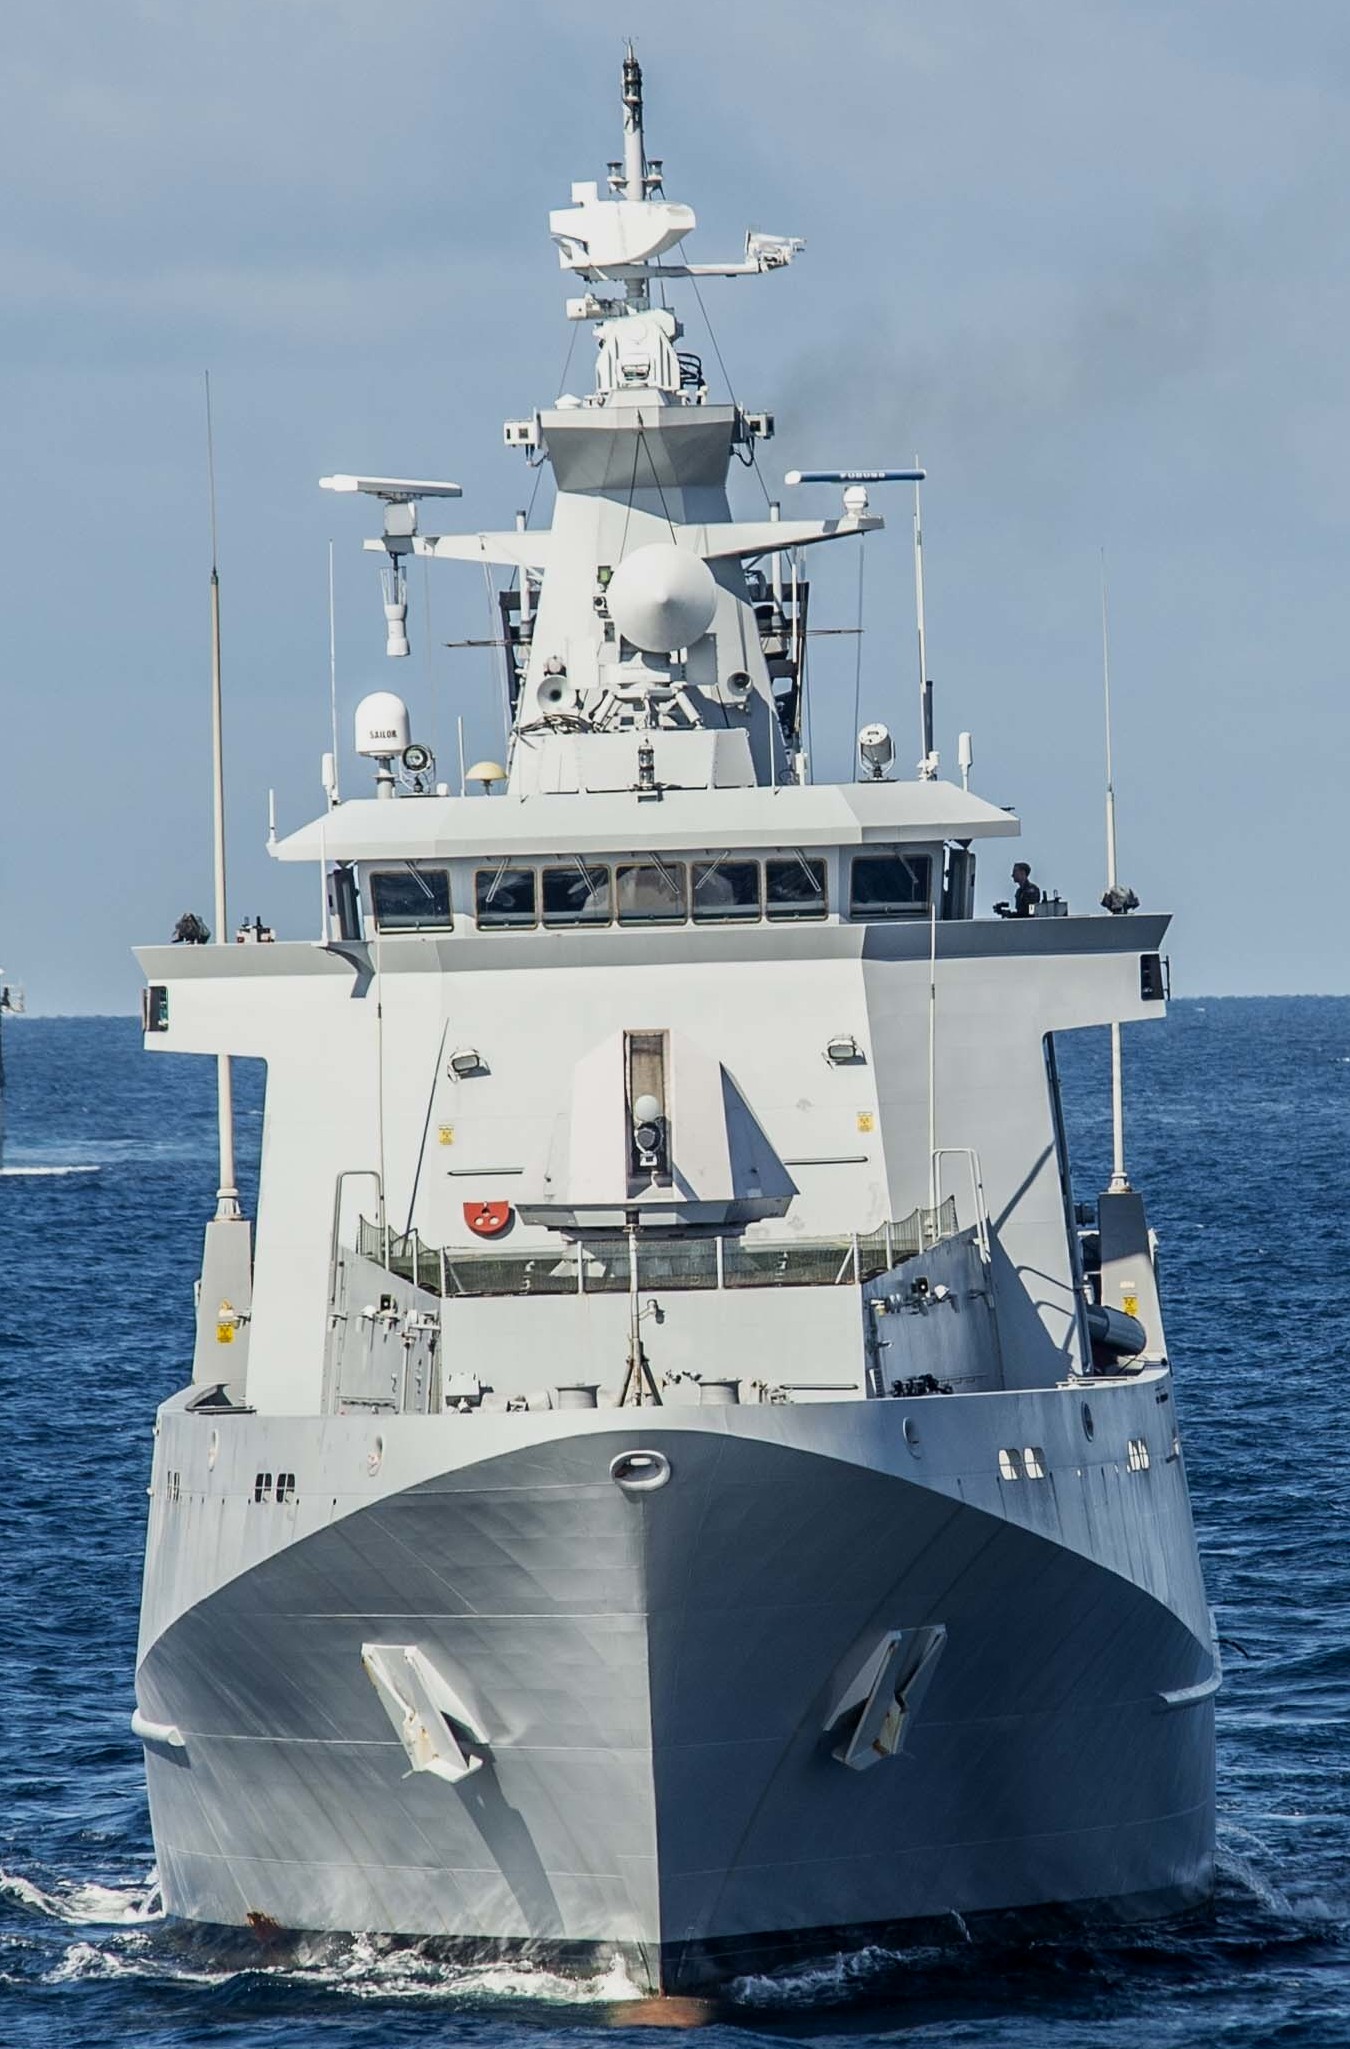 opv 08 kdb darulaman offshore patrol vessel darussalem class royal brunei navy 03